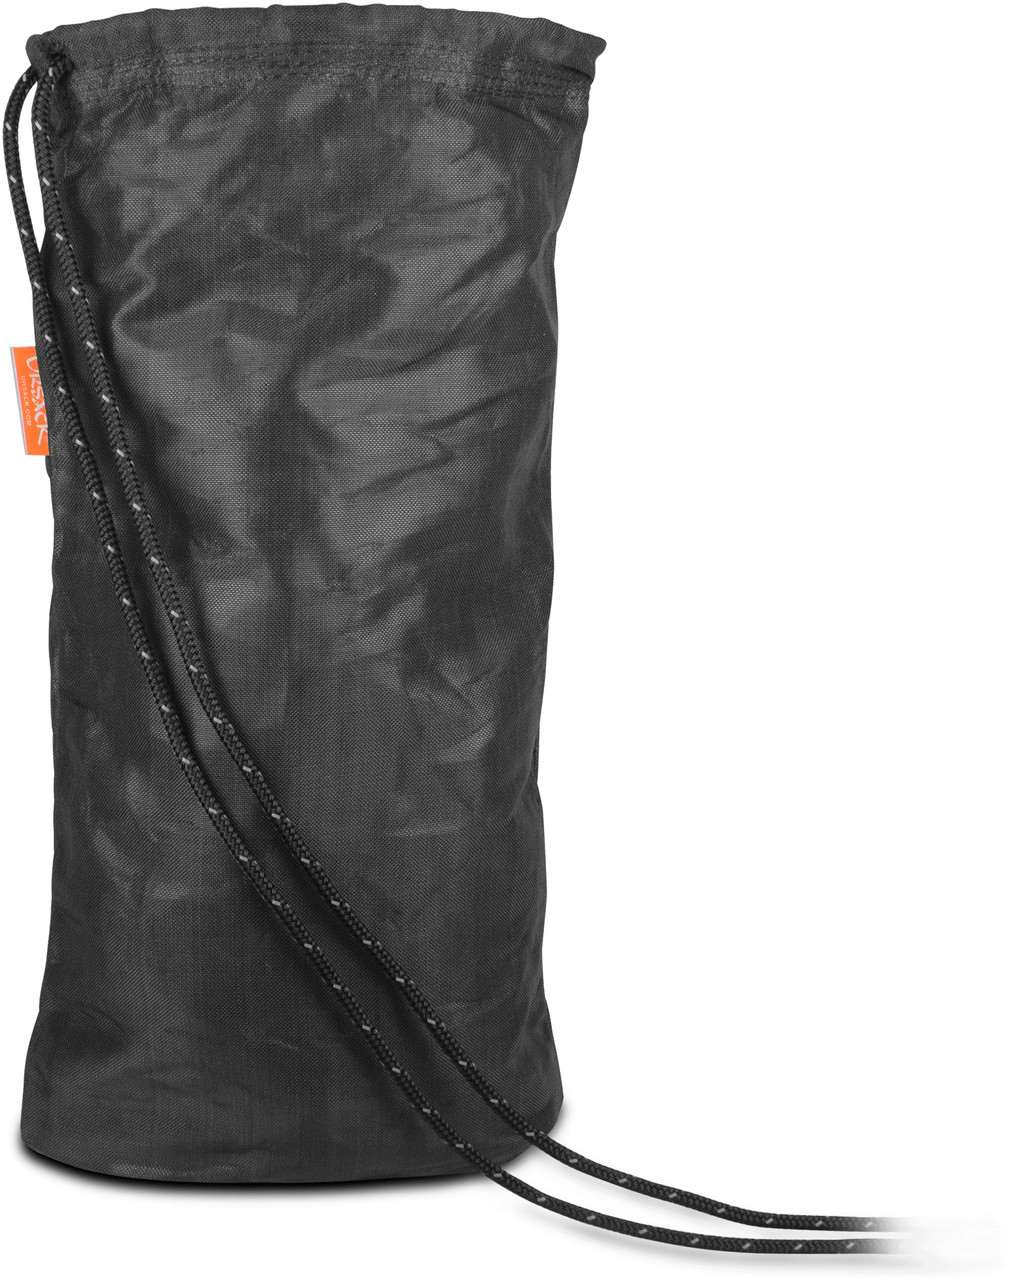 Major XL Bear Resistant Bag Black